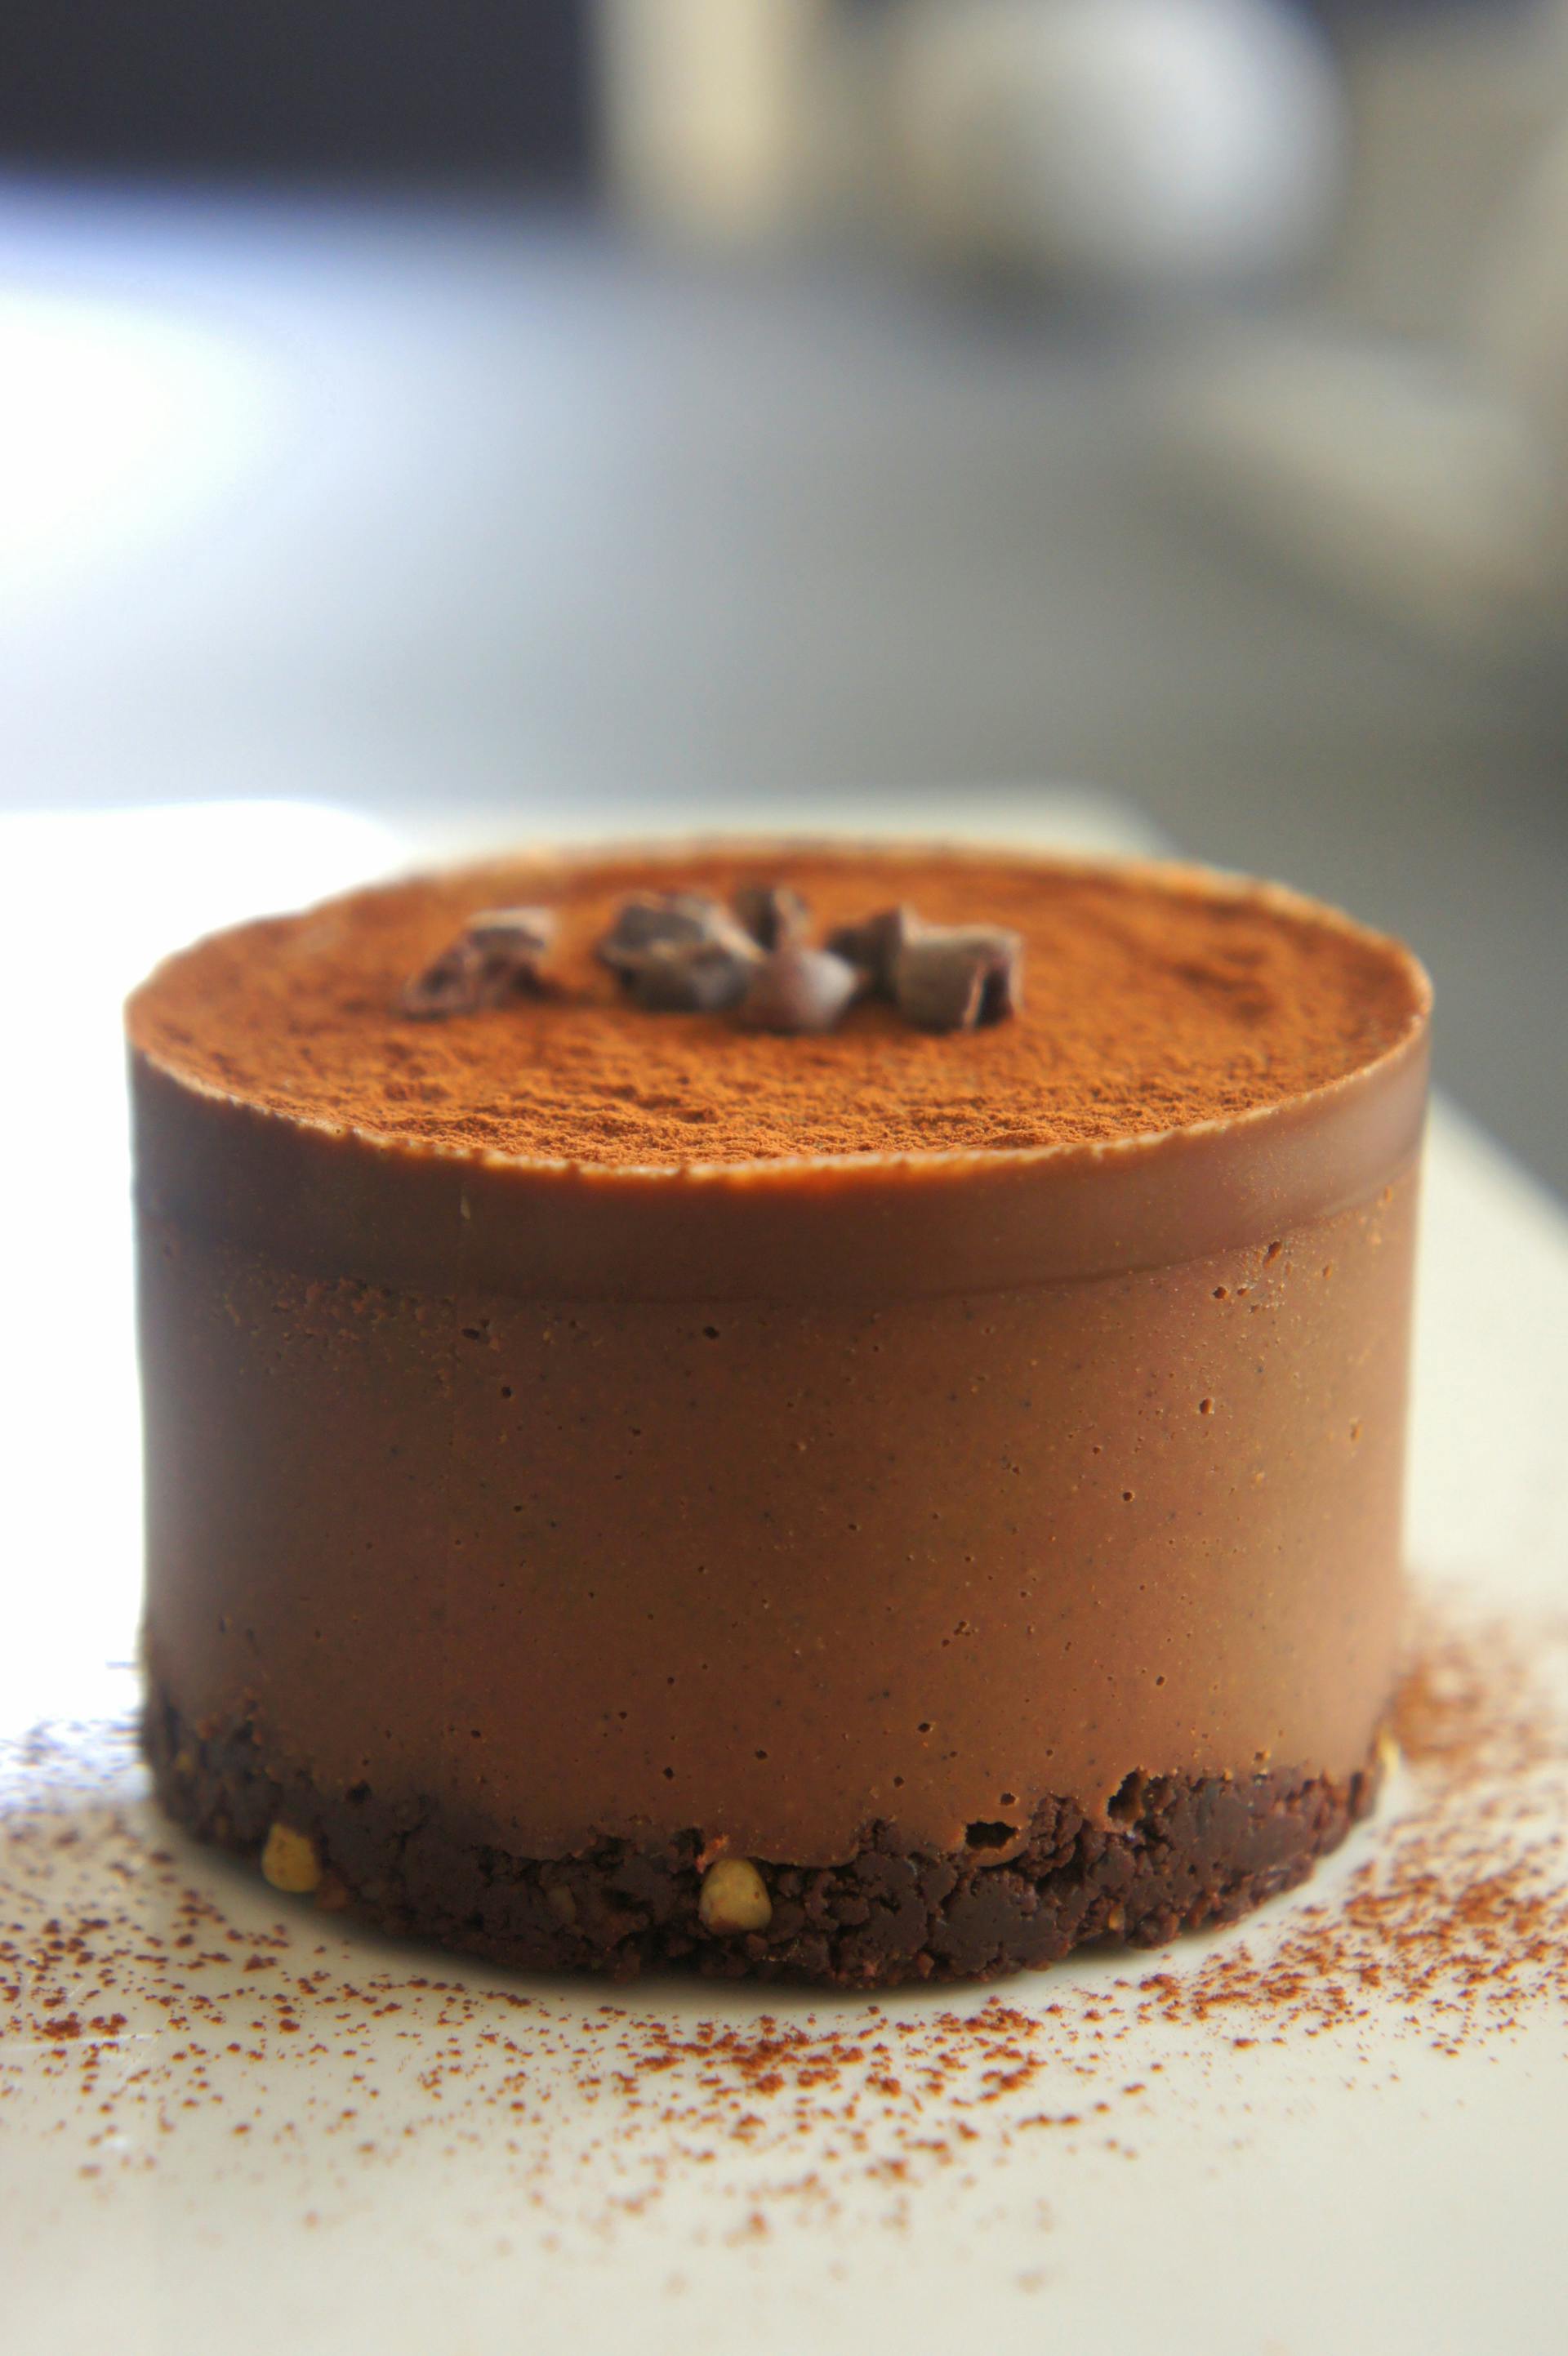 A chocolate cake | Source: Pexels